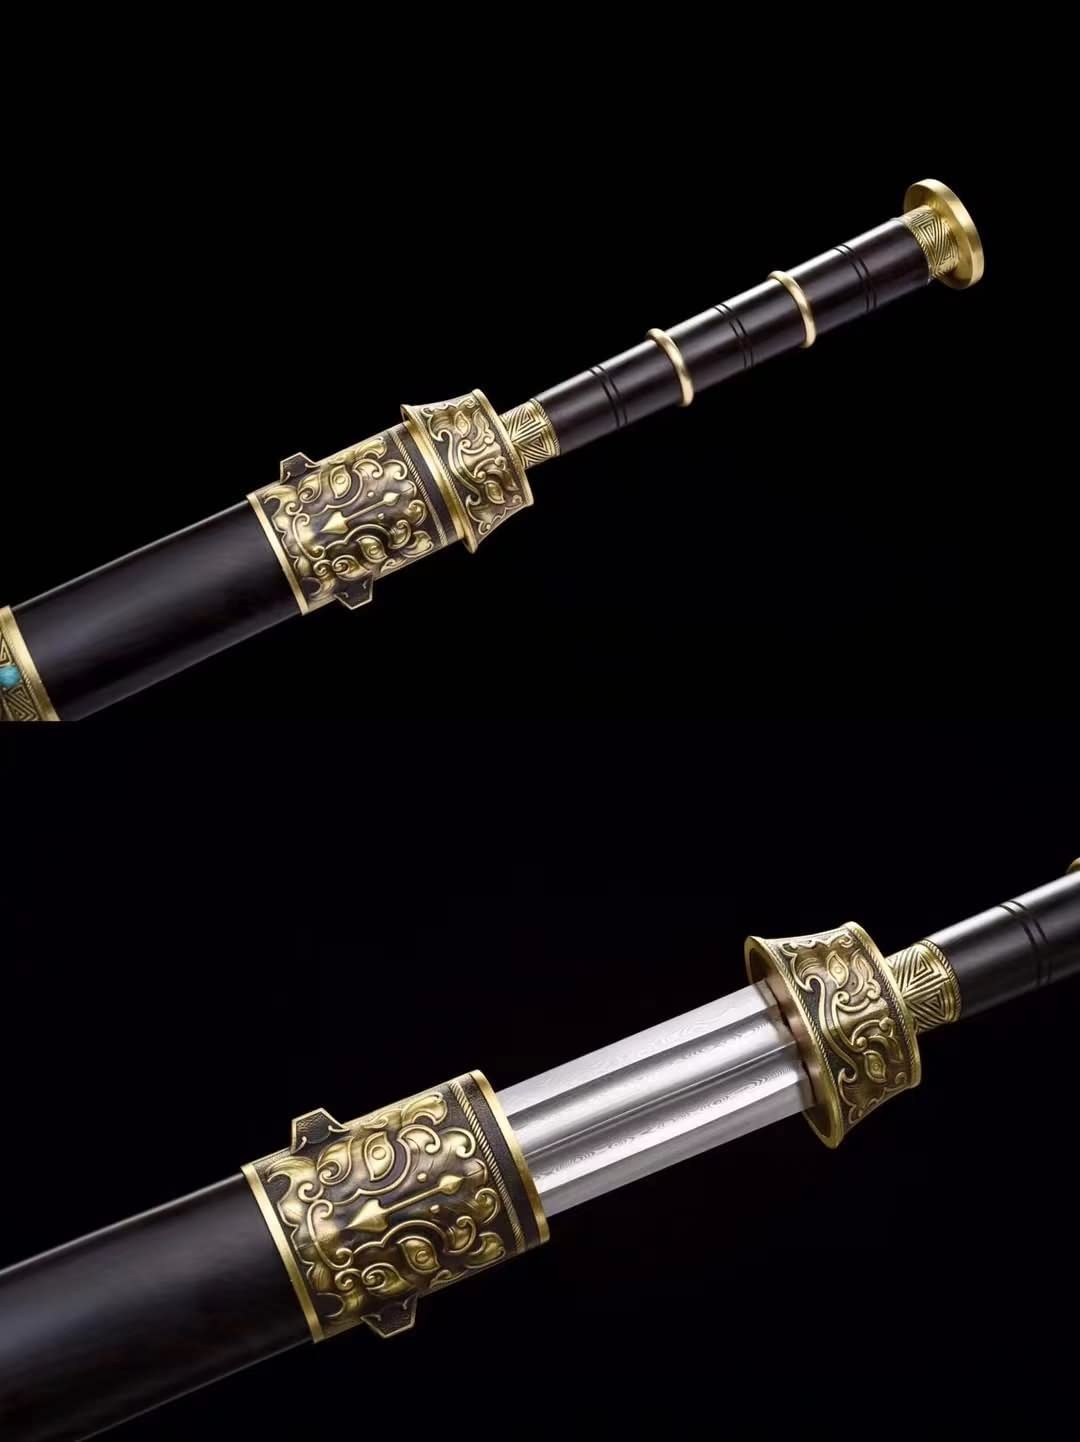 Three Kingdoms Sword,Forged Damascus Blades,Brass Fittings,Handmade Art